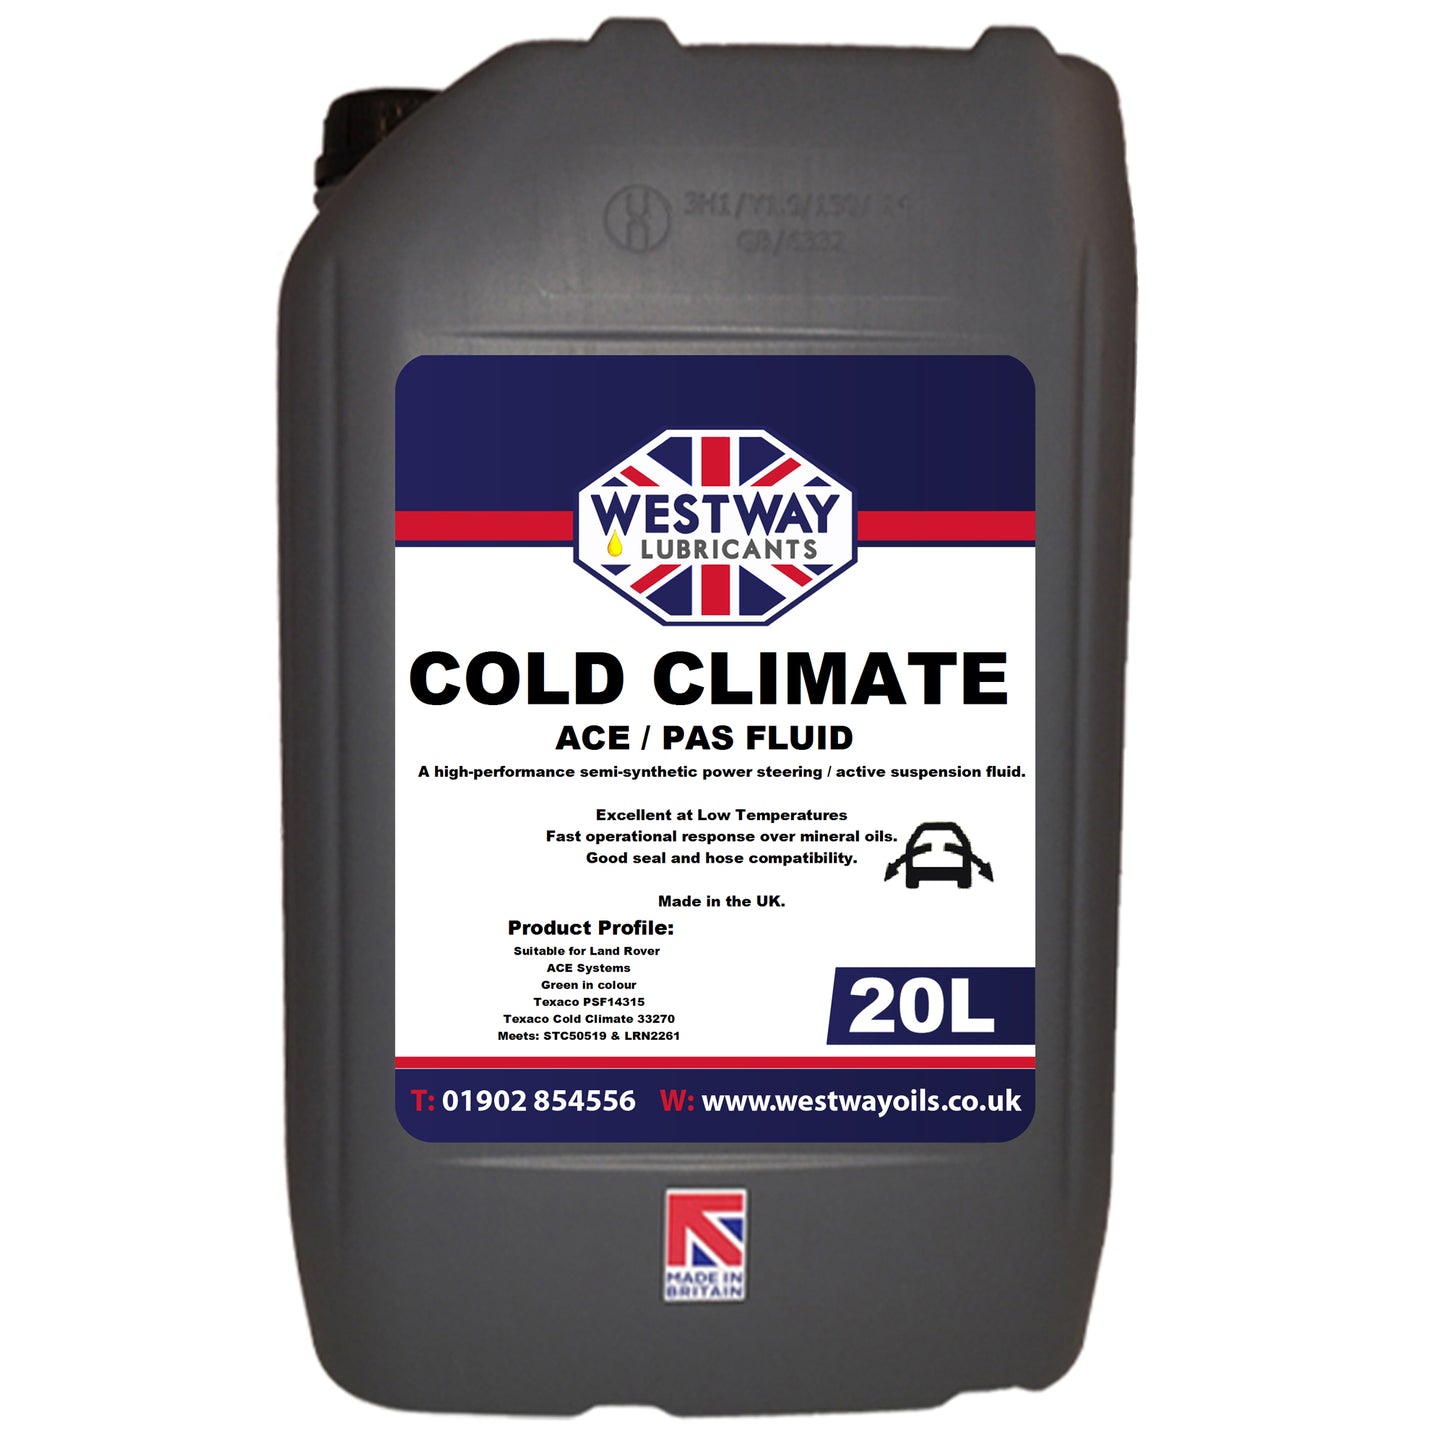 Land Rover ACE Fluid / Cold Climate Fluid